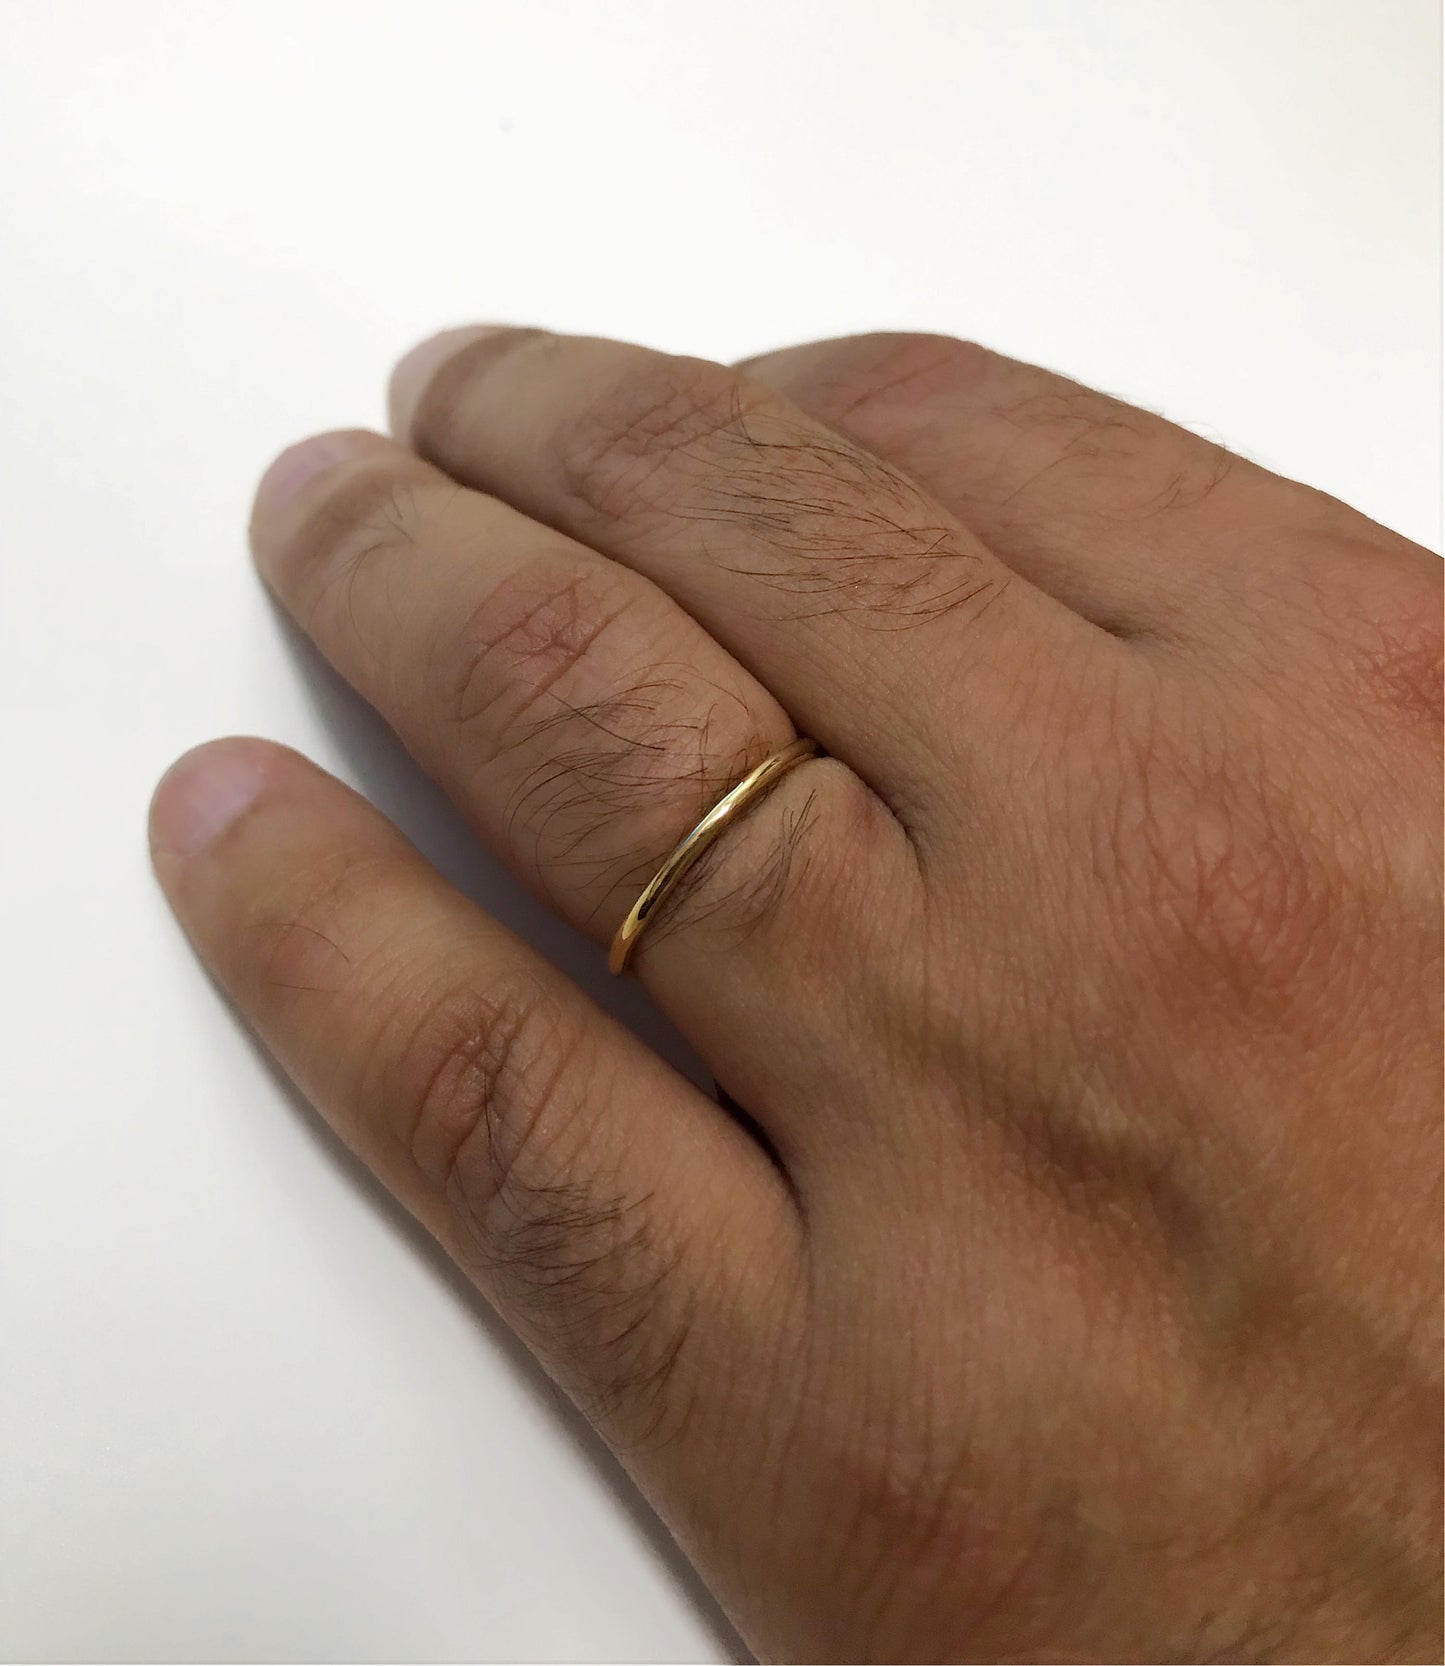 1.5mm Thin Gold Band - 14k Yellow